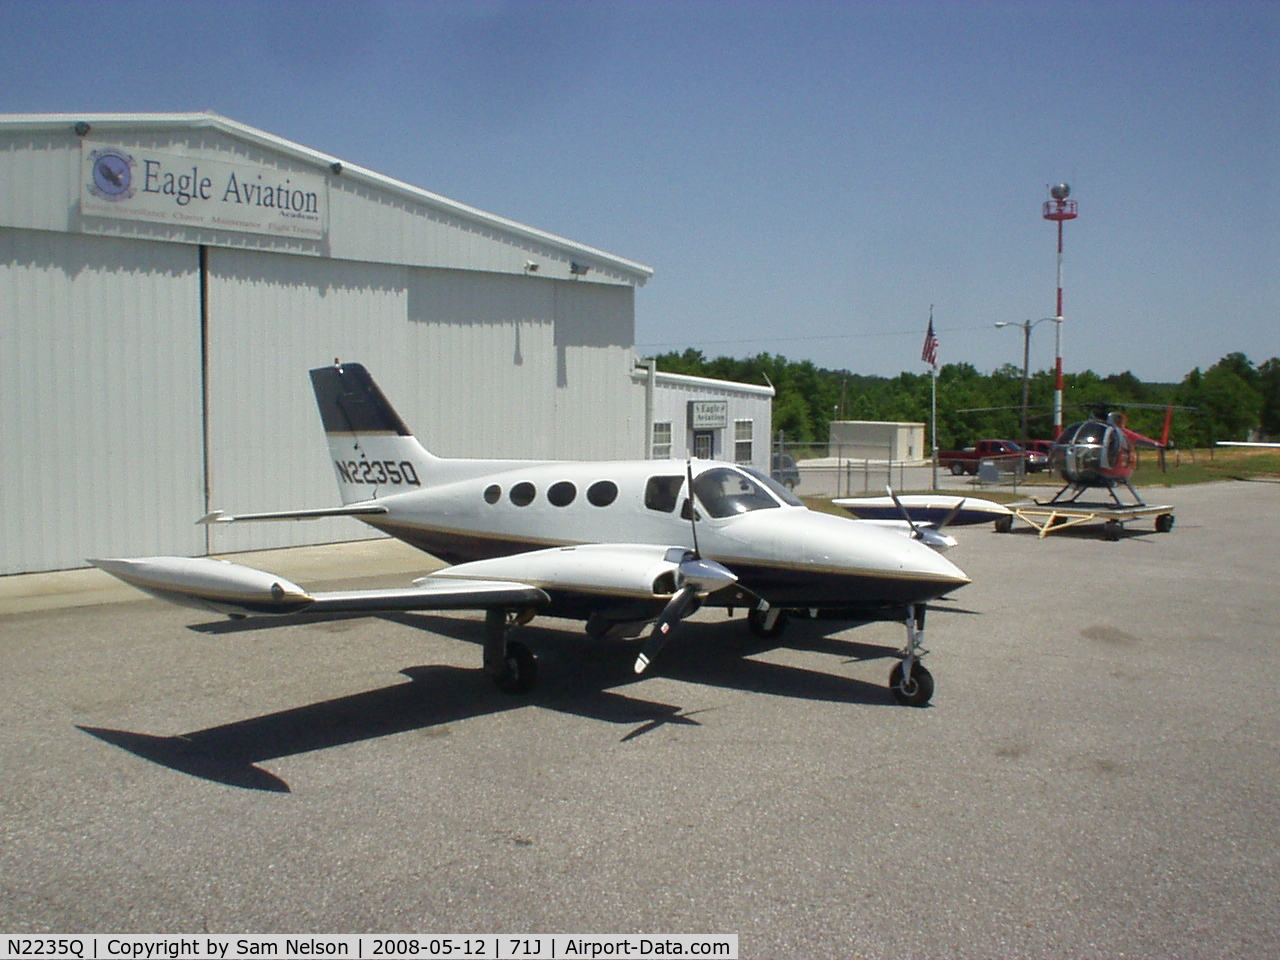 N2235Q, 1968 Cessna 421A Golden Eagle C/N 421A0035, N2235Q at the Eagle Aviation Ramp Ozark Al.